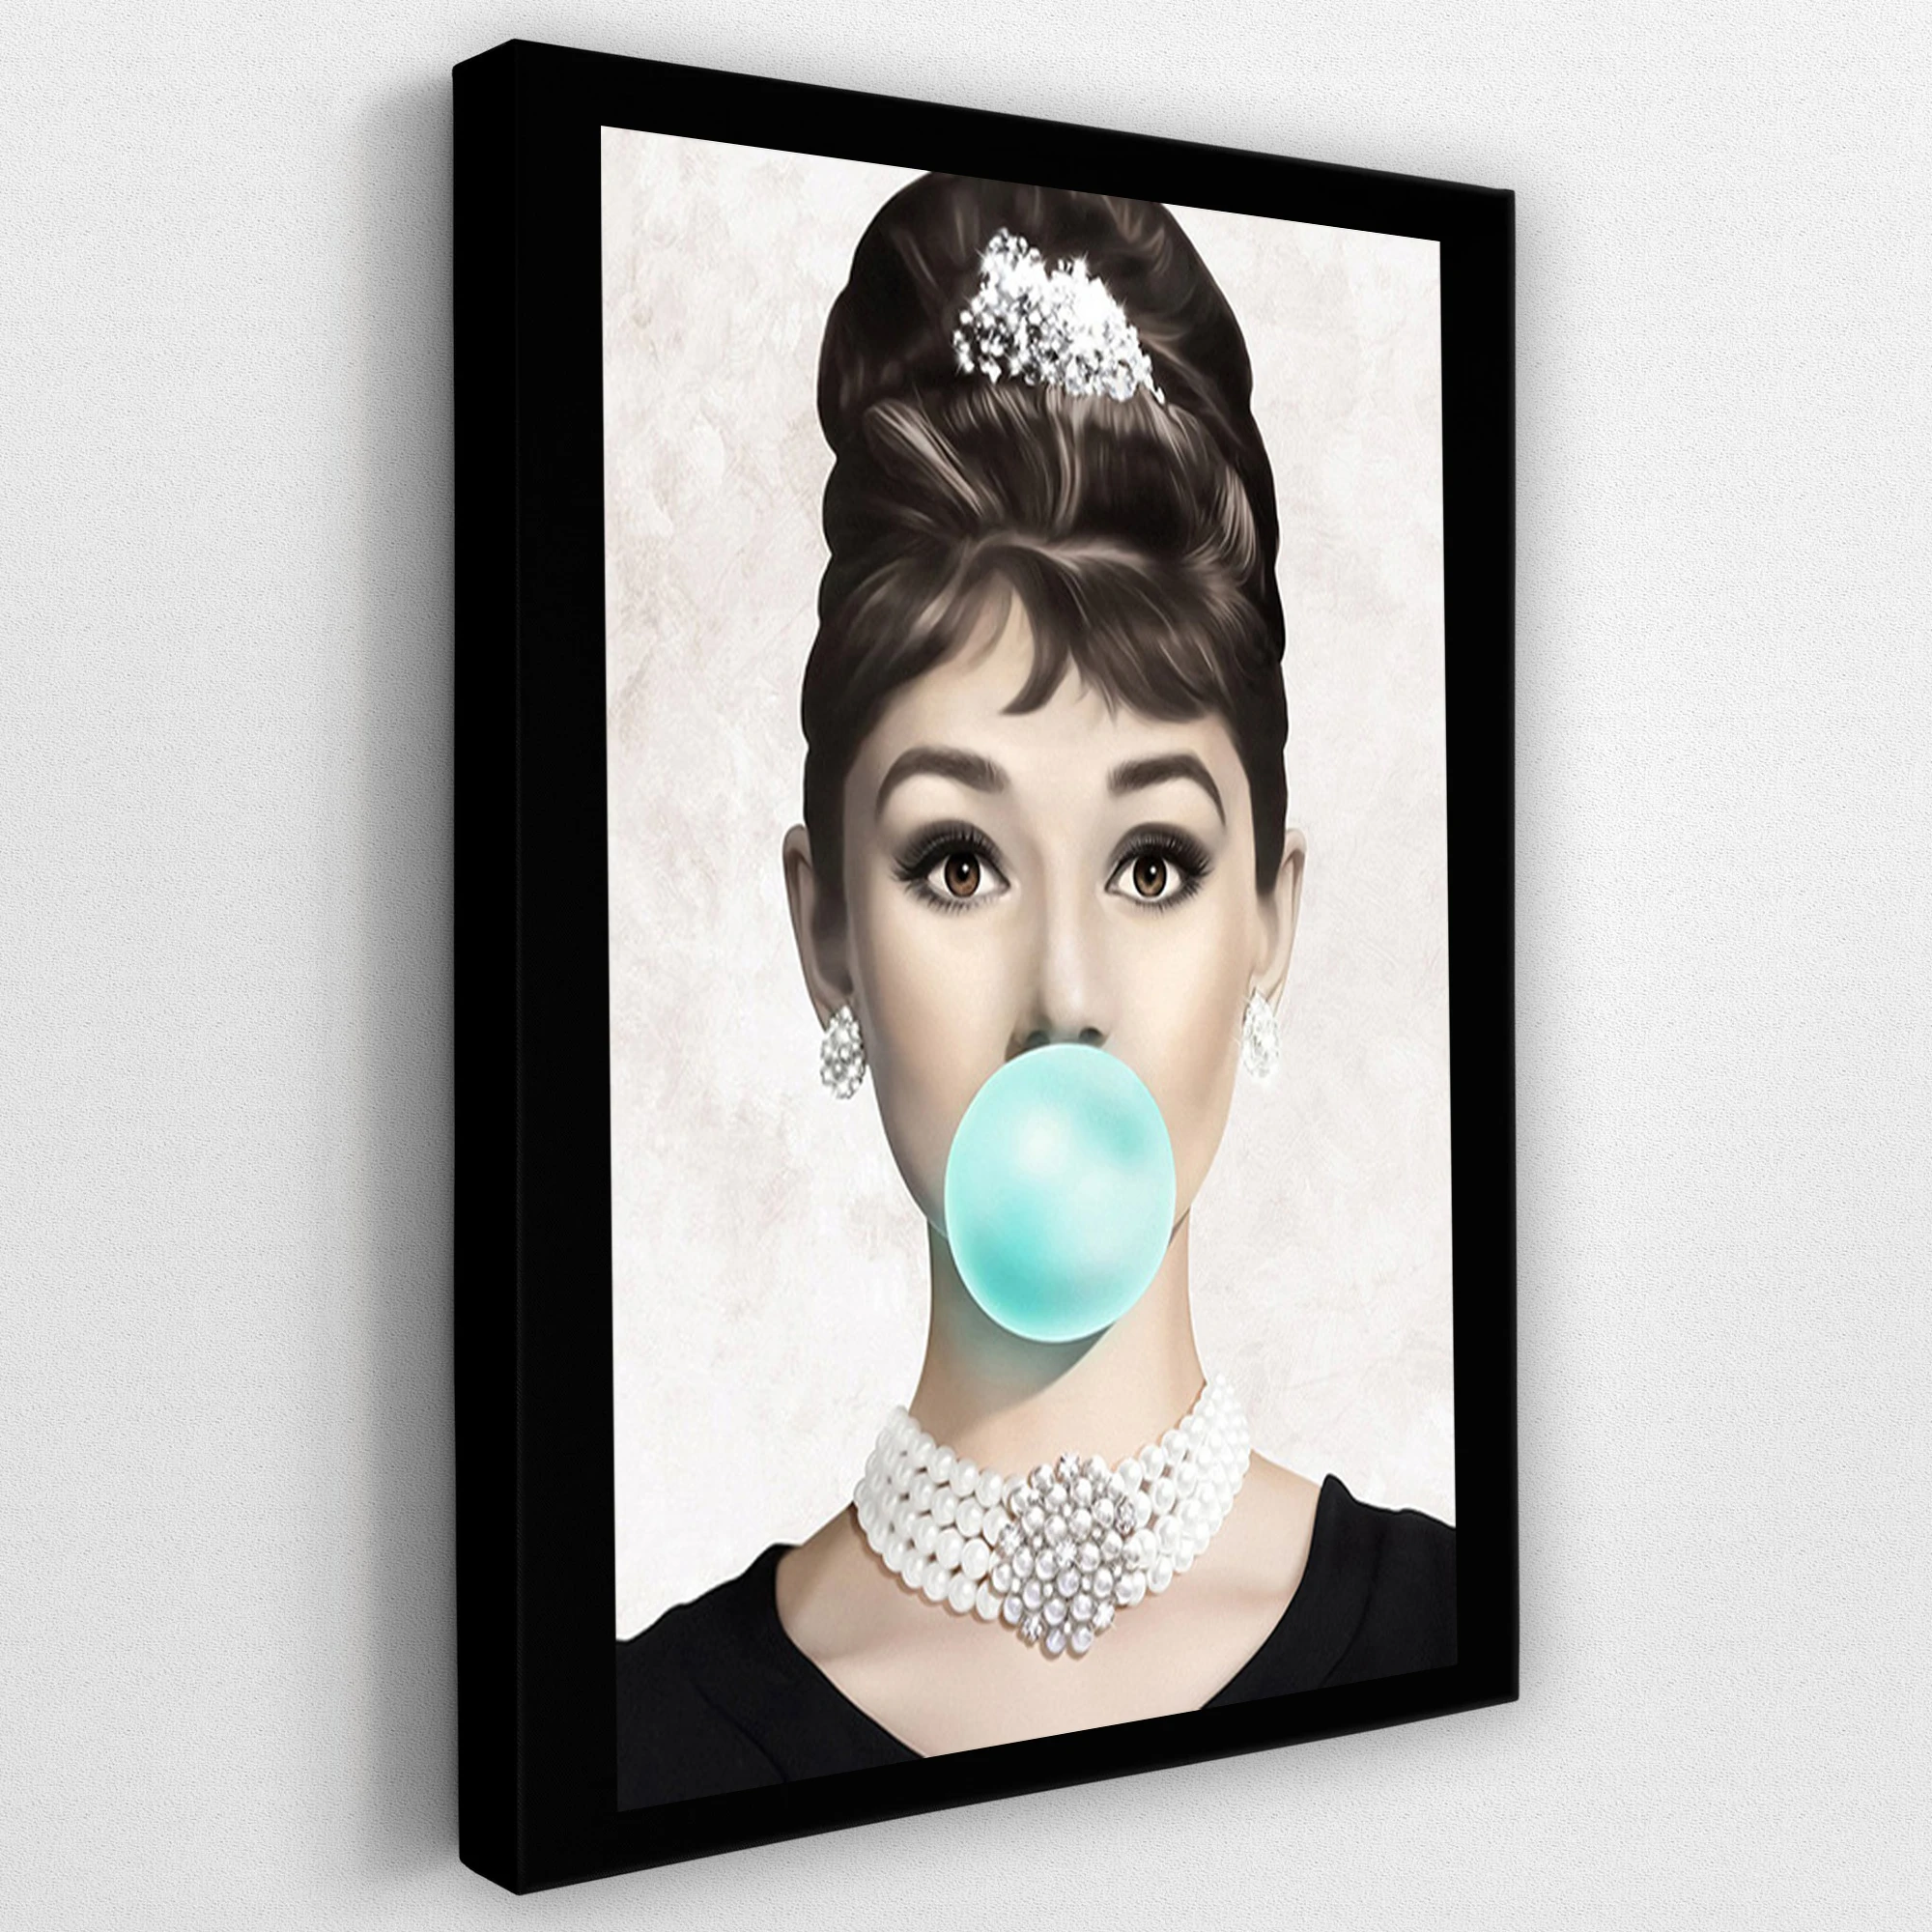 Audrey Hepburn Bubble Gum Photo Picture Print On Framed Canvas Wall Art Decor 